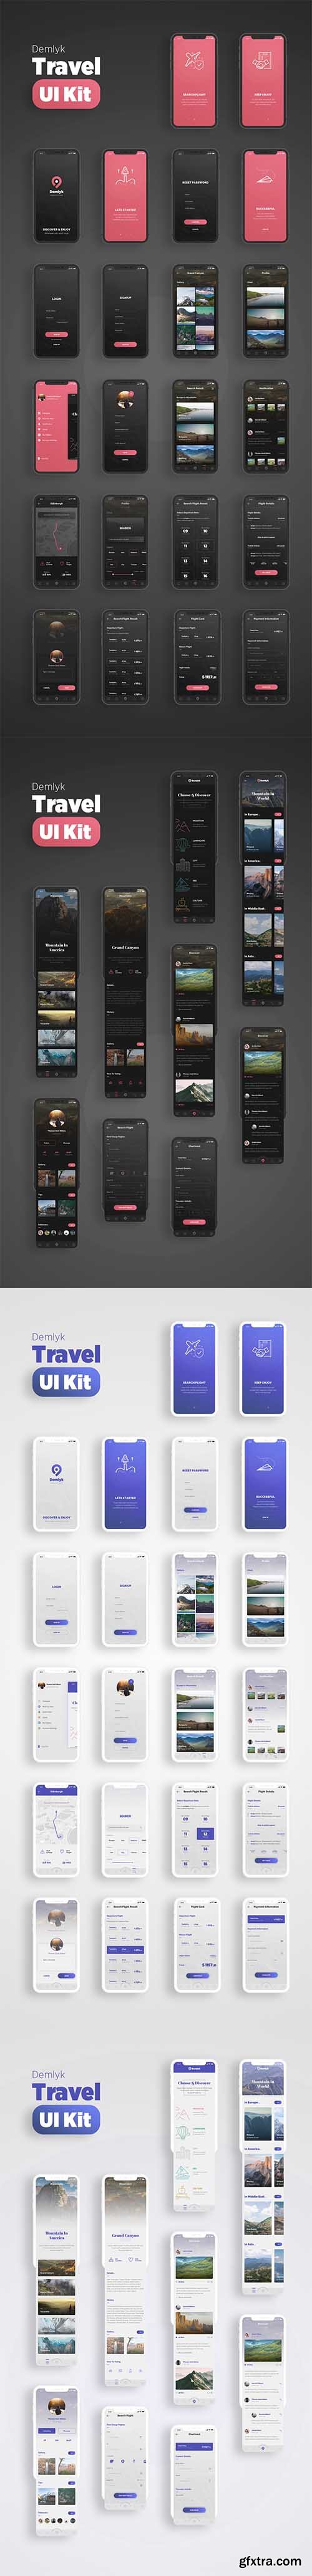 Demlyk Travel iOS UI Kit